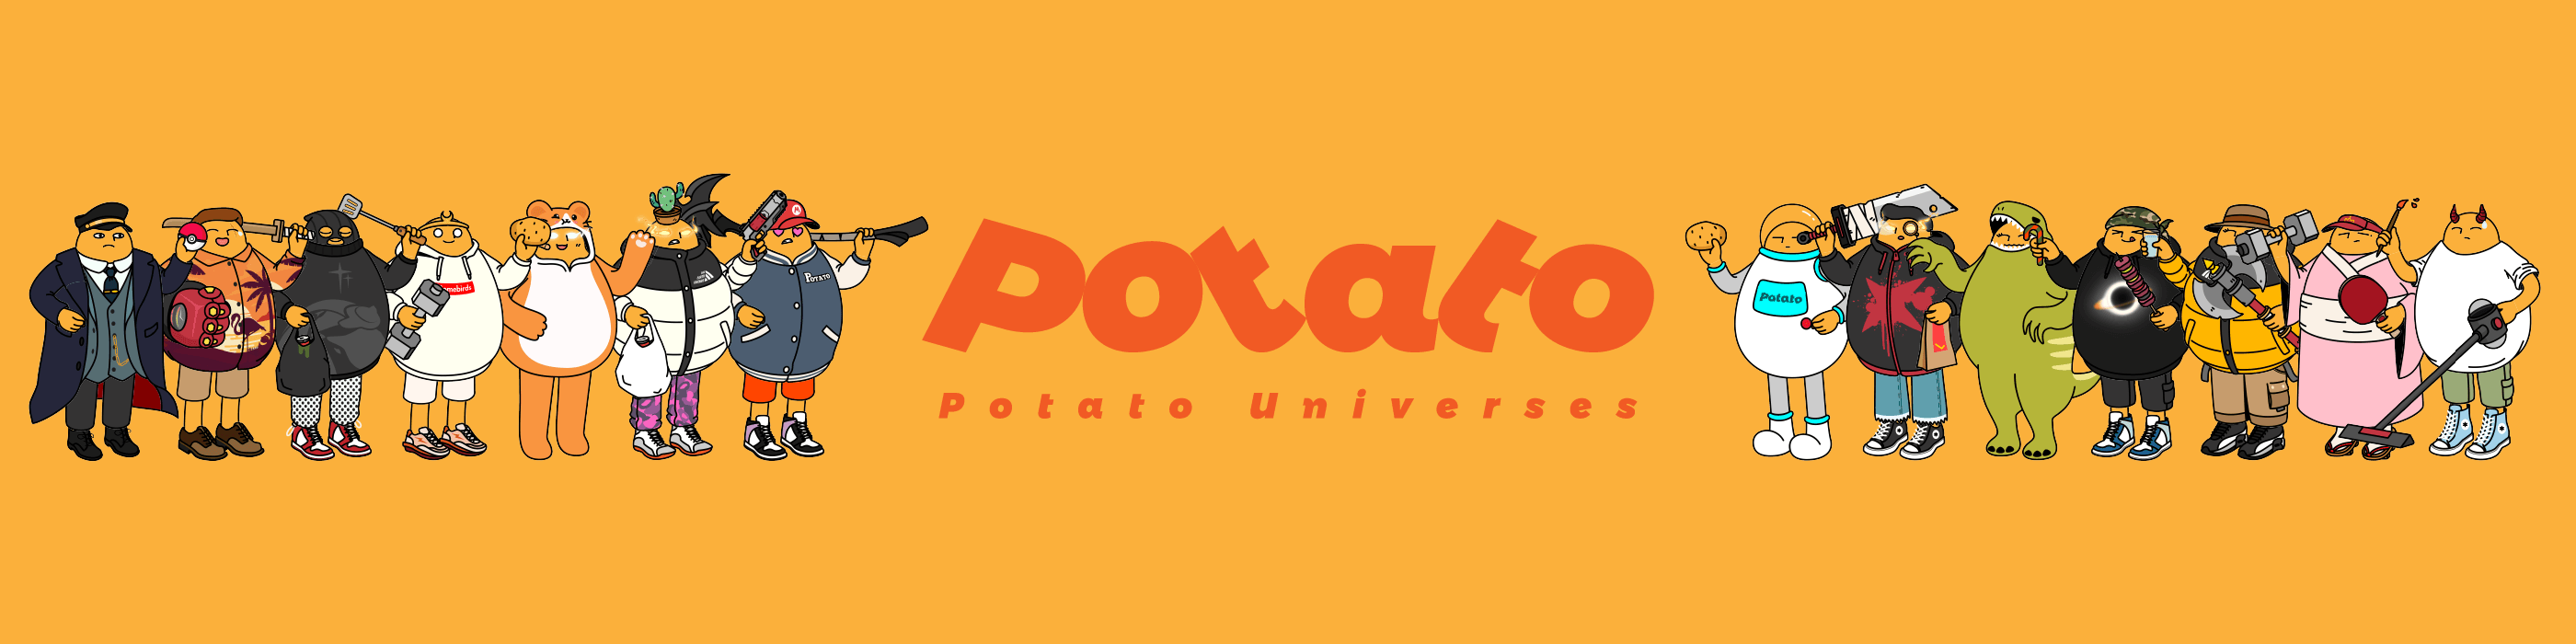 TeamPotato2 banner